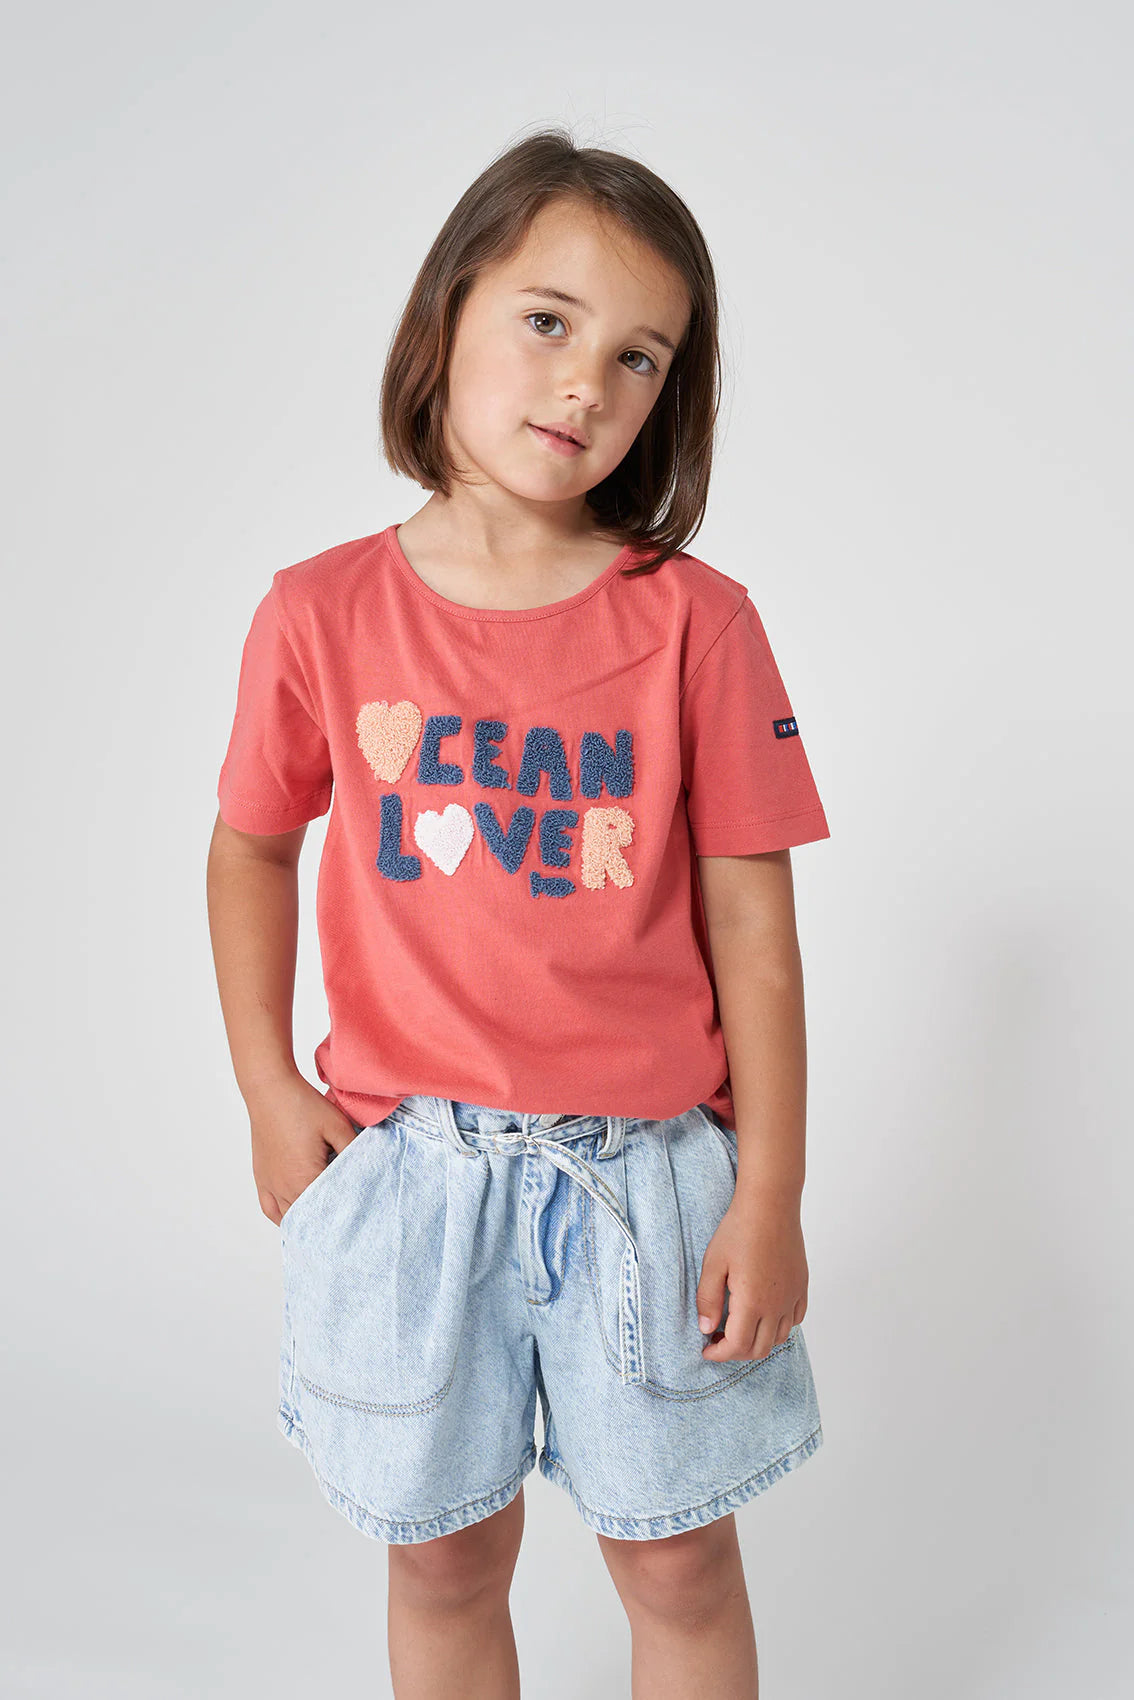 Batela "Ocean Lover" cotton T-shirt